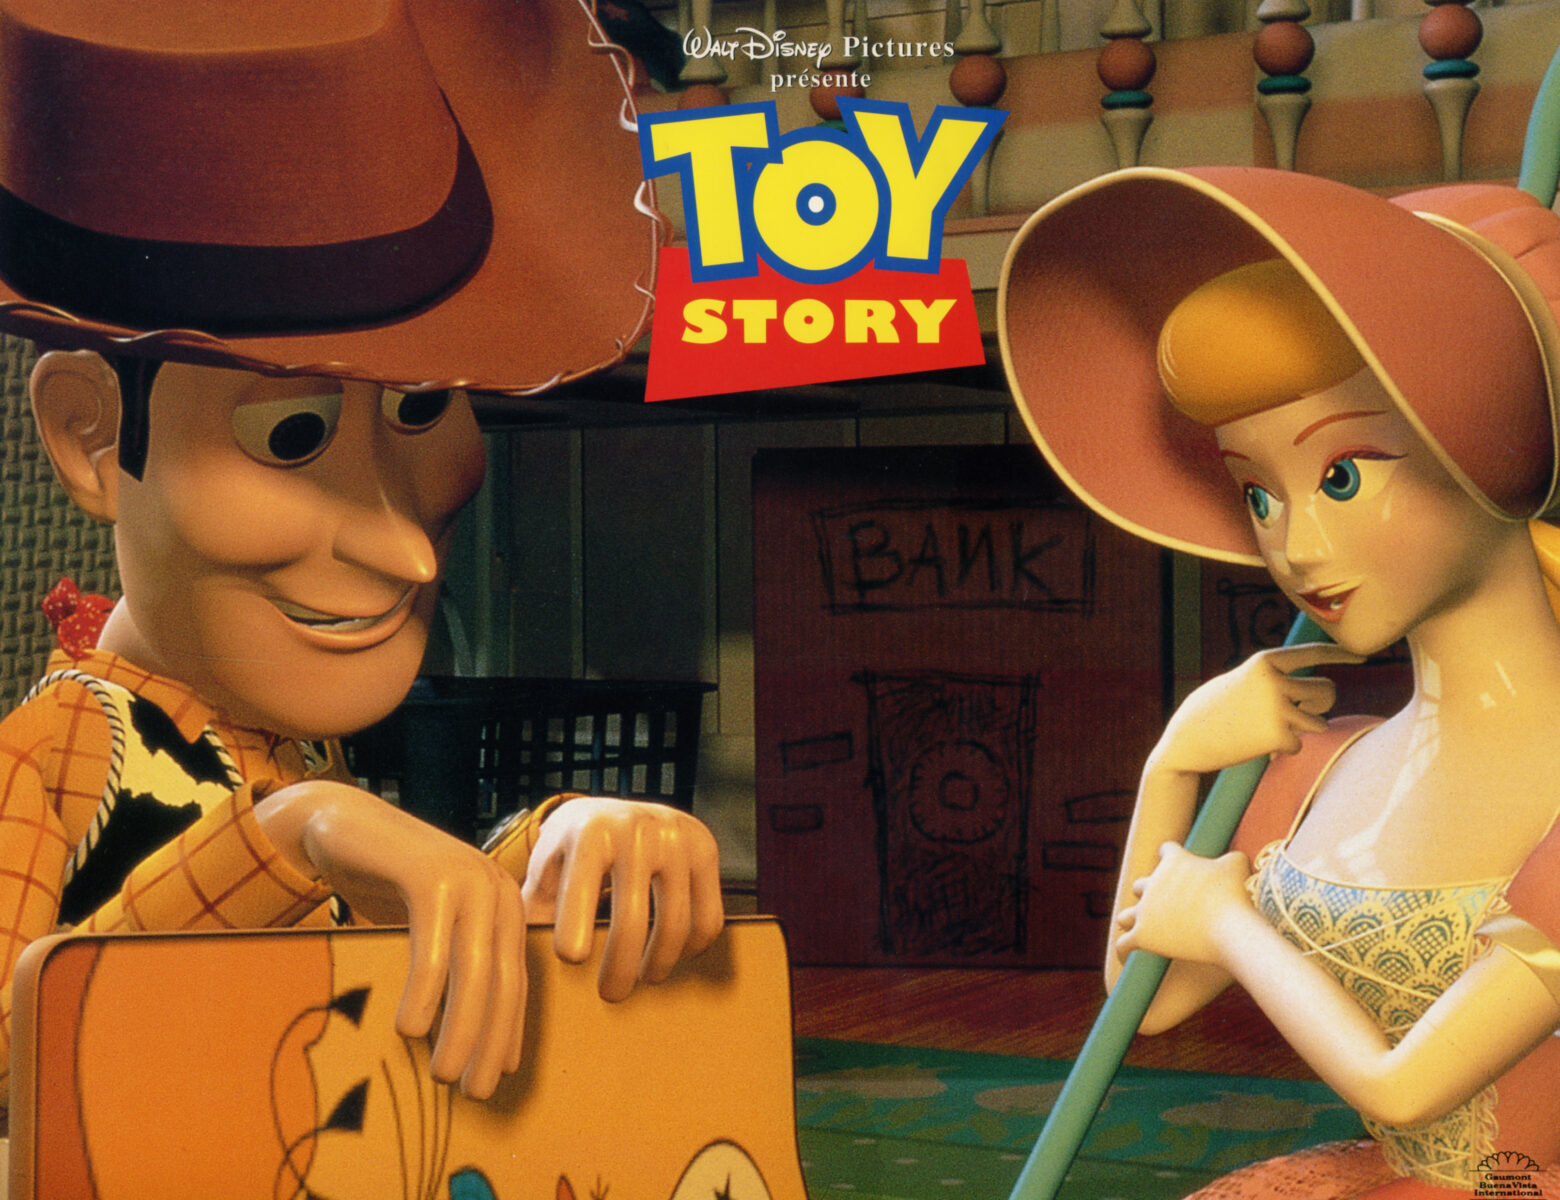 Toy story 4 Lasseter